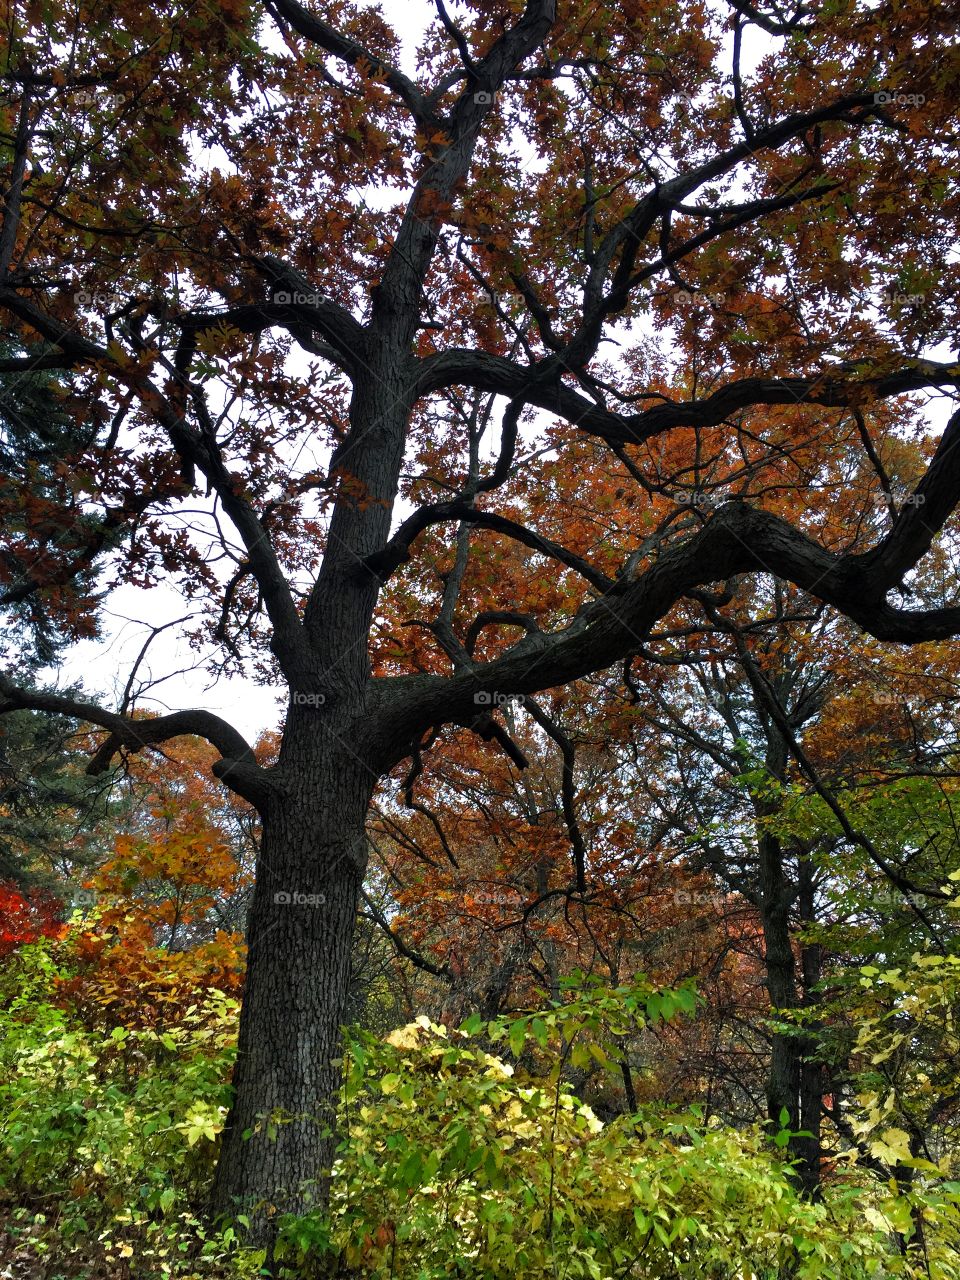 Fall foliage at Eloise Butler Gardens 